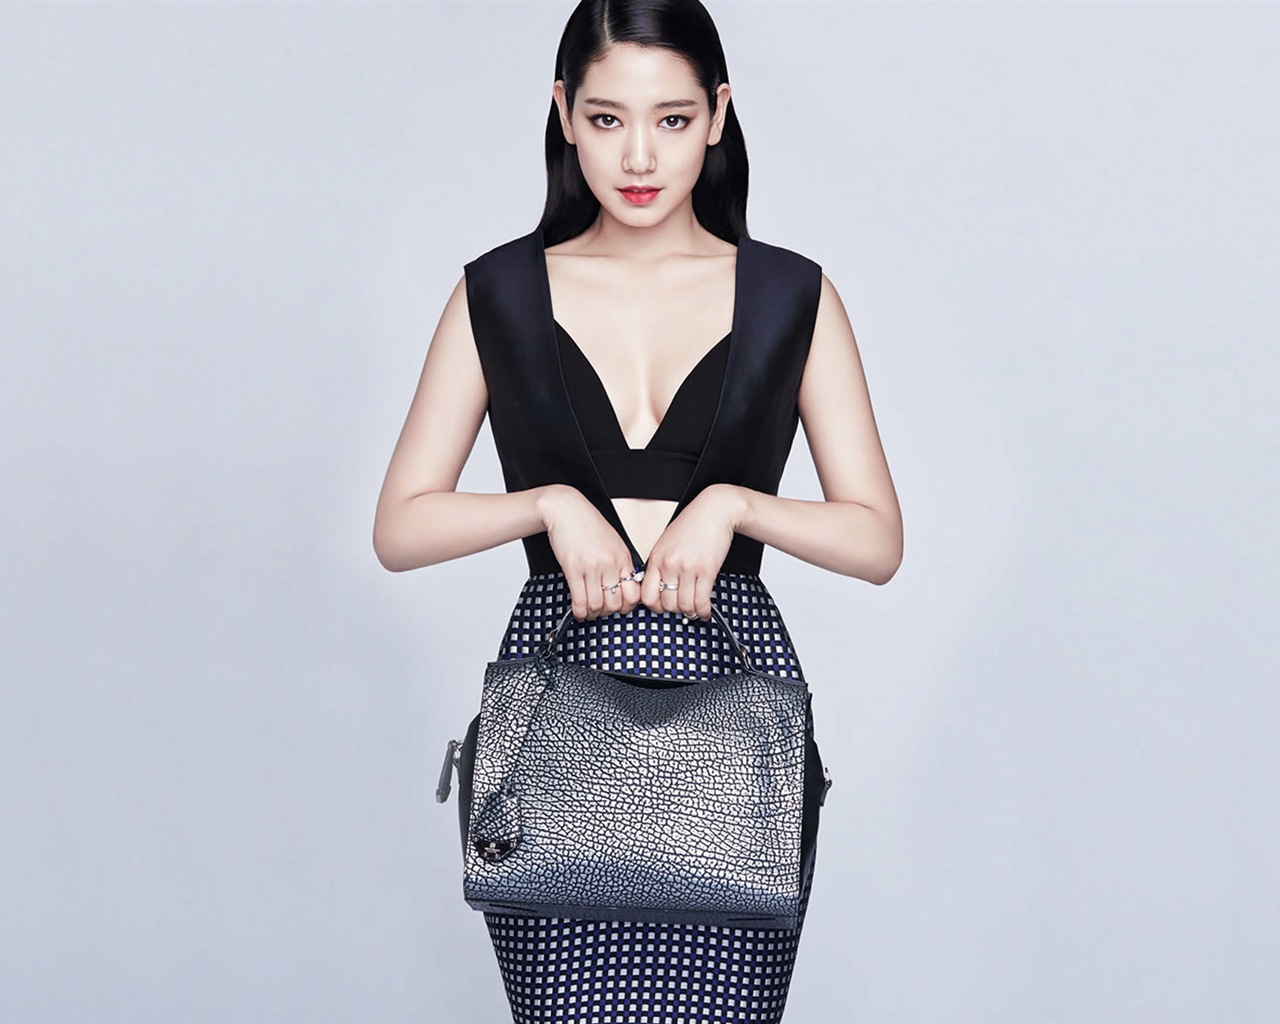 South Korean actress Park Shin Hye HD Wallpapers #2 - 1280x1024